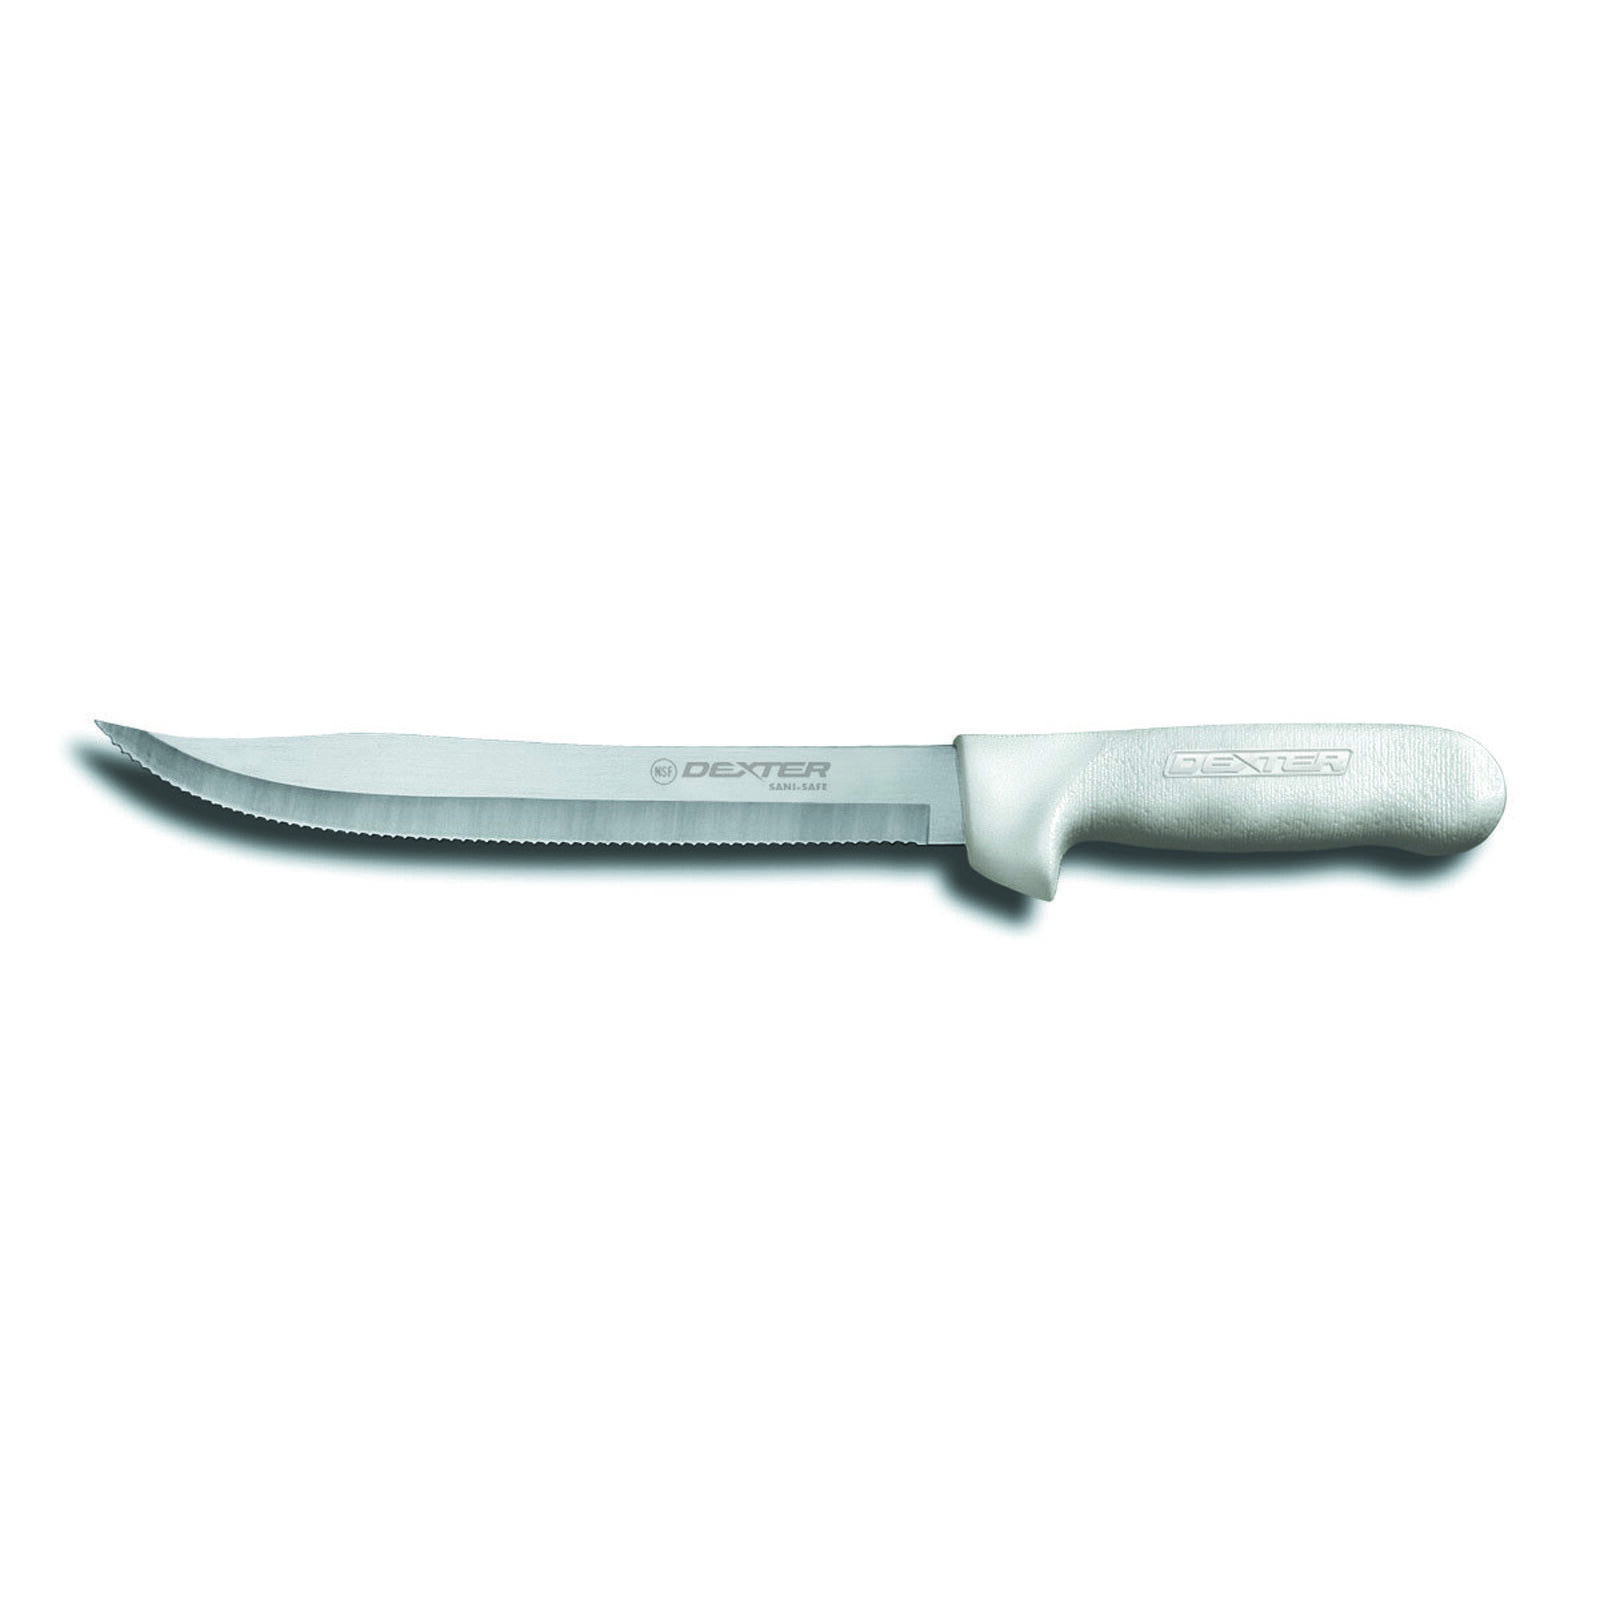 Dexter Russell Sani-safe® (13563) 9" Utility Slicer - S142-9sc-pcp